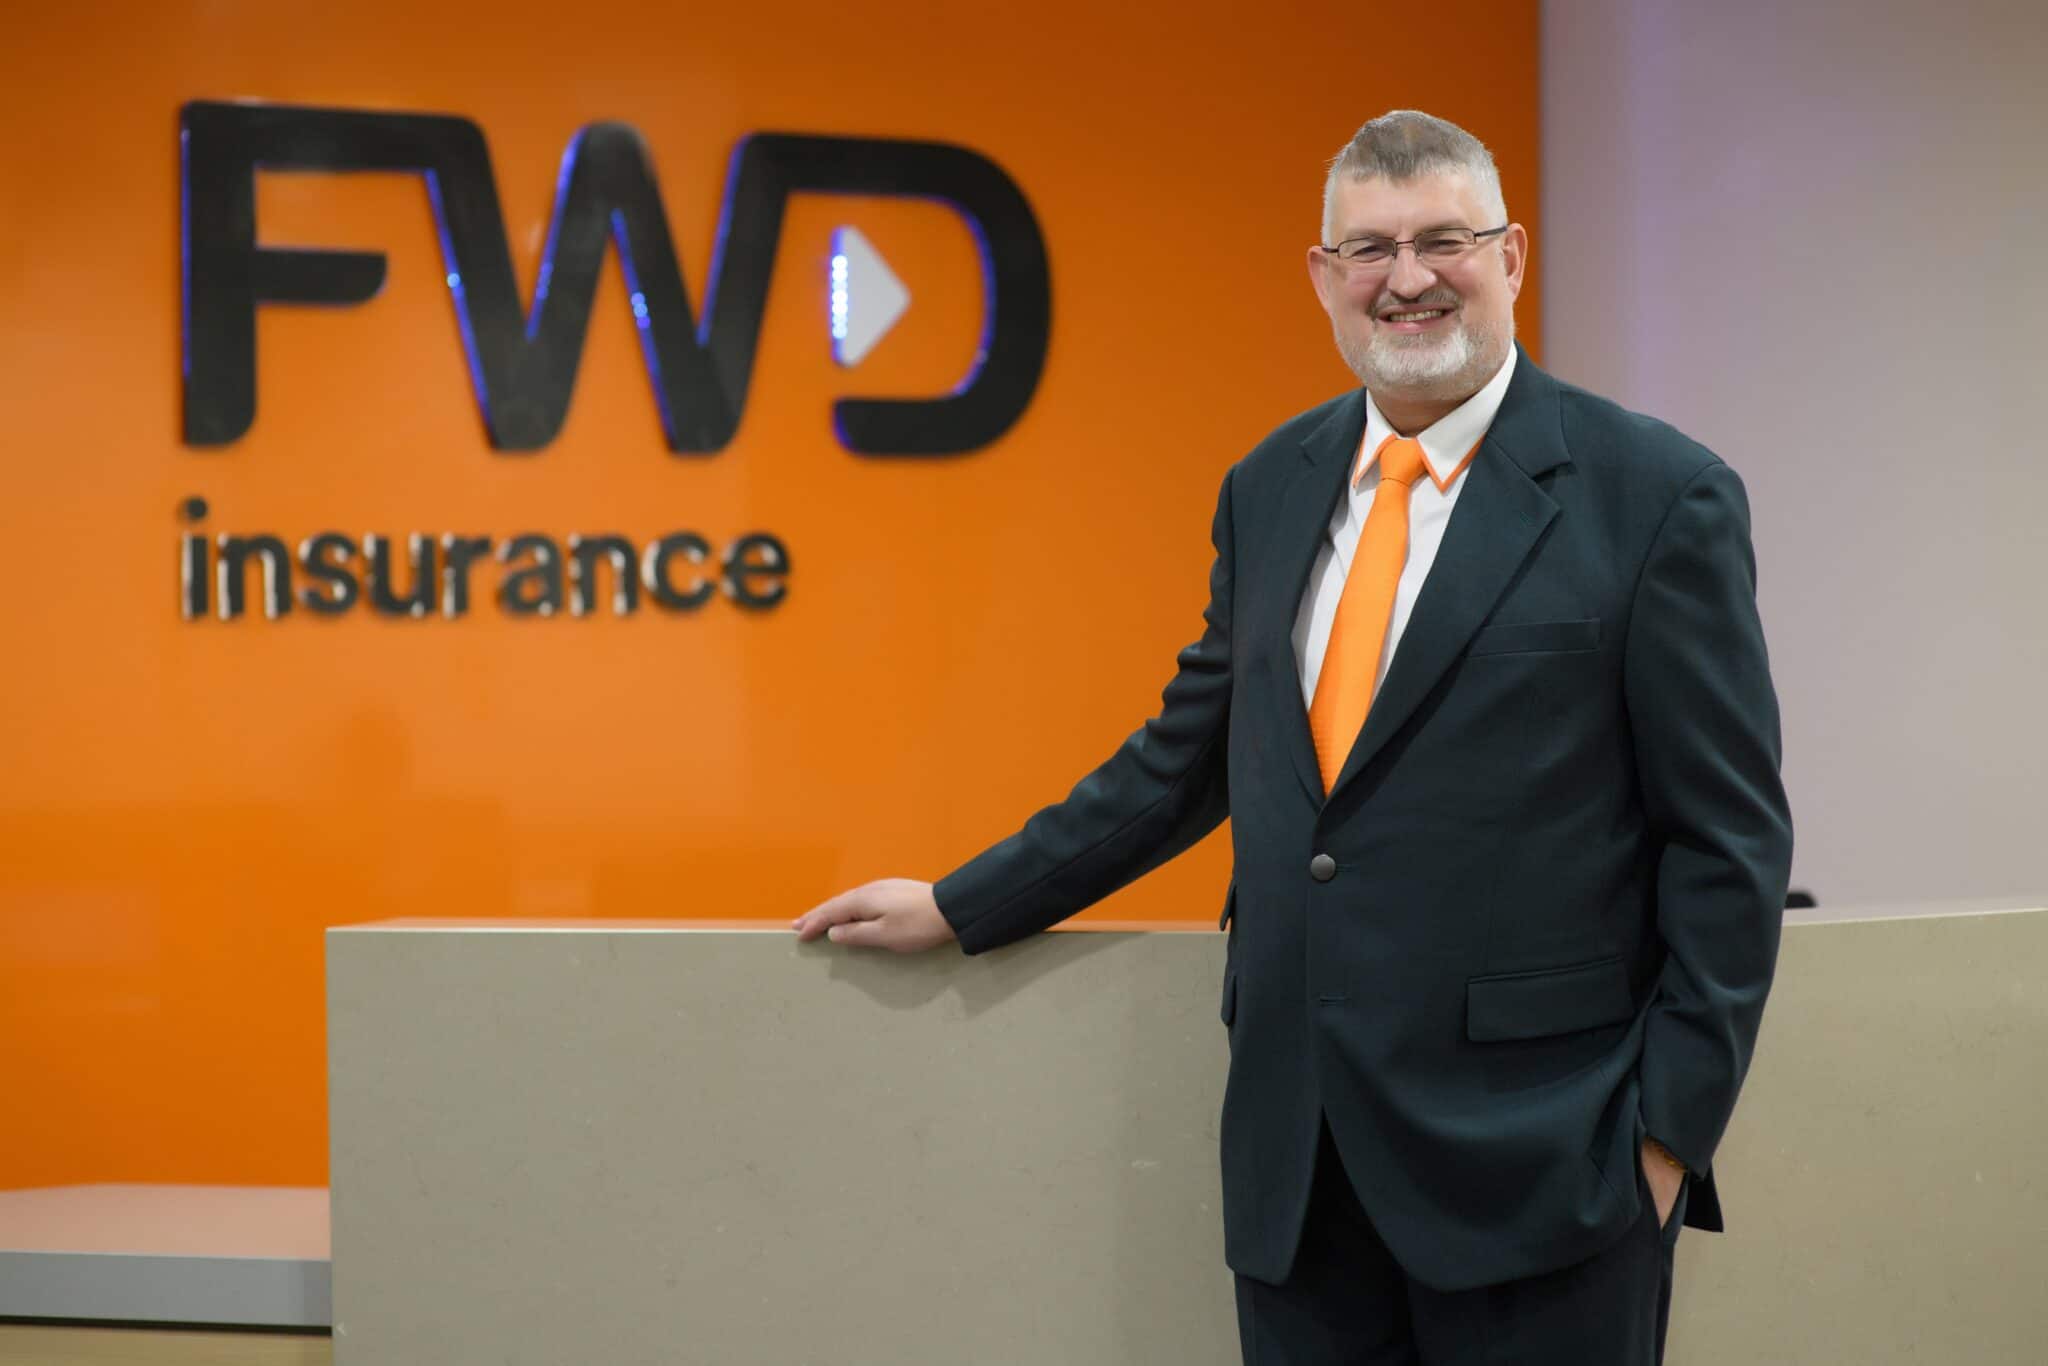 David Korunić, Chief Executive Officer of FWD Insurance